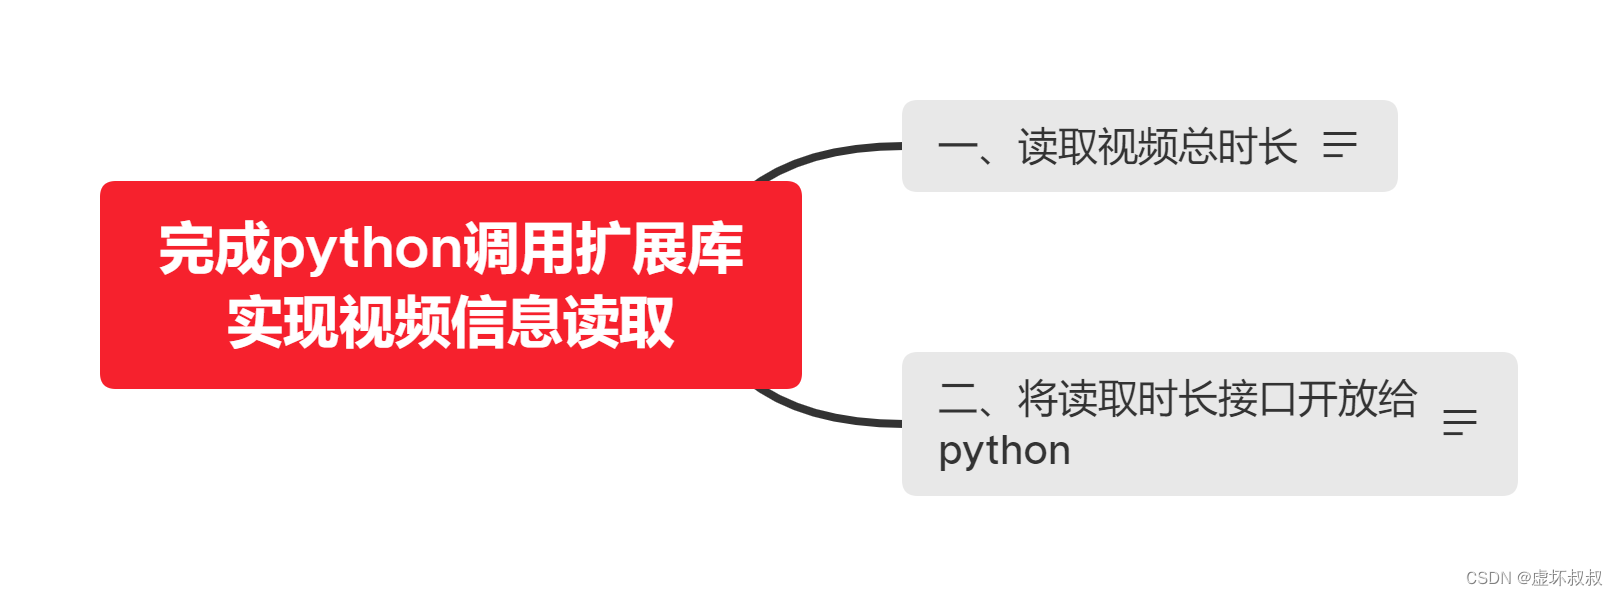 889ace84090944a2bee9ced8b0423ab4 - Python&C++相互混合调用编程全面实战-28完成python调用扩展库实现视频信息读取